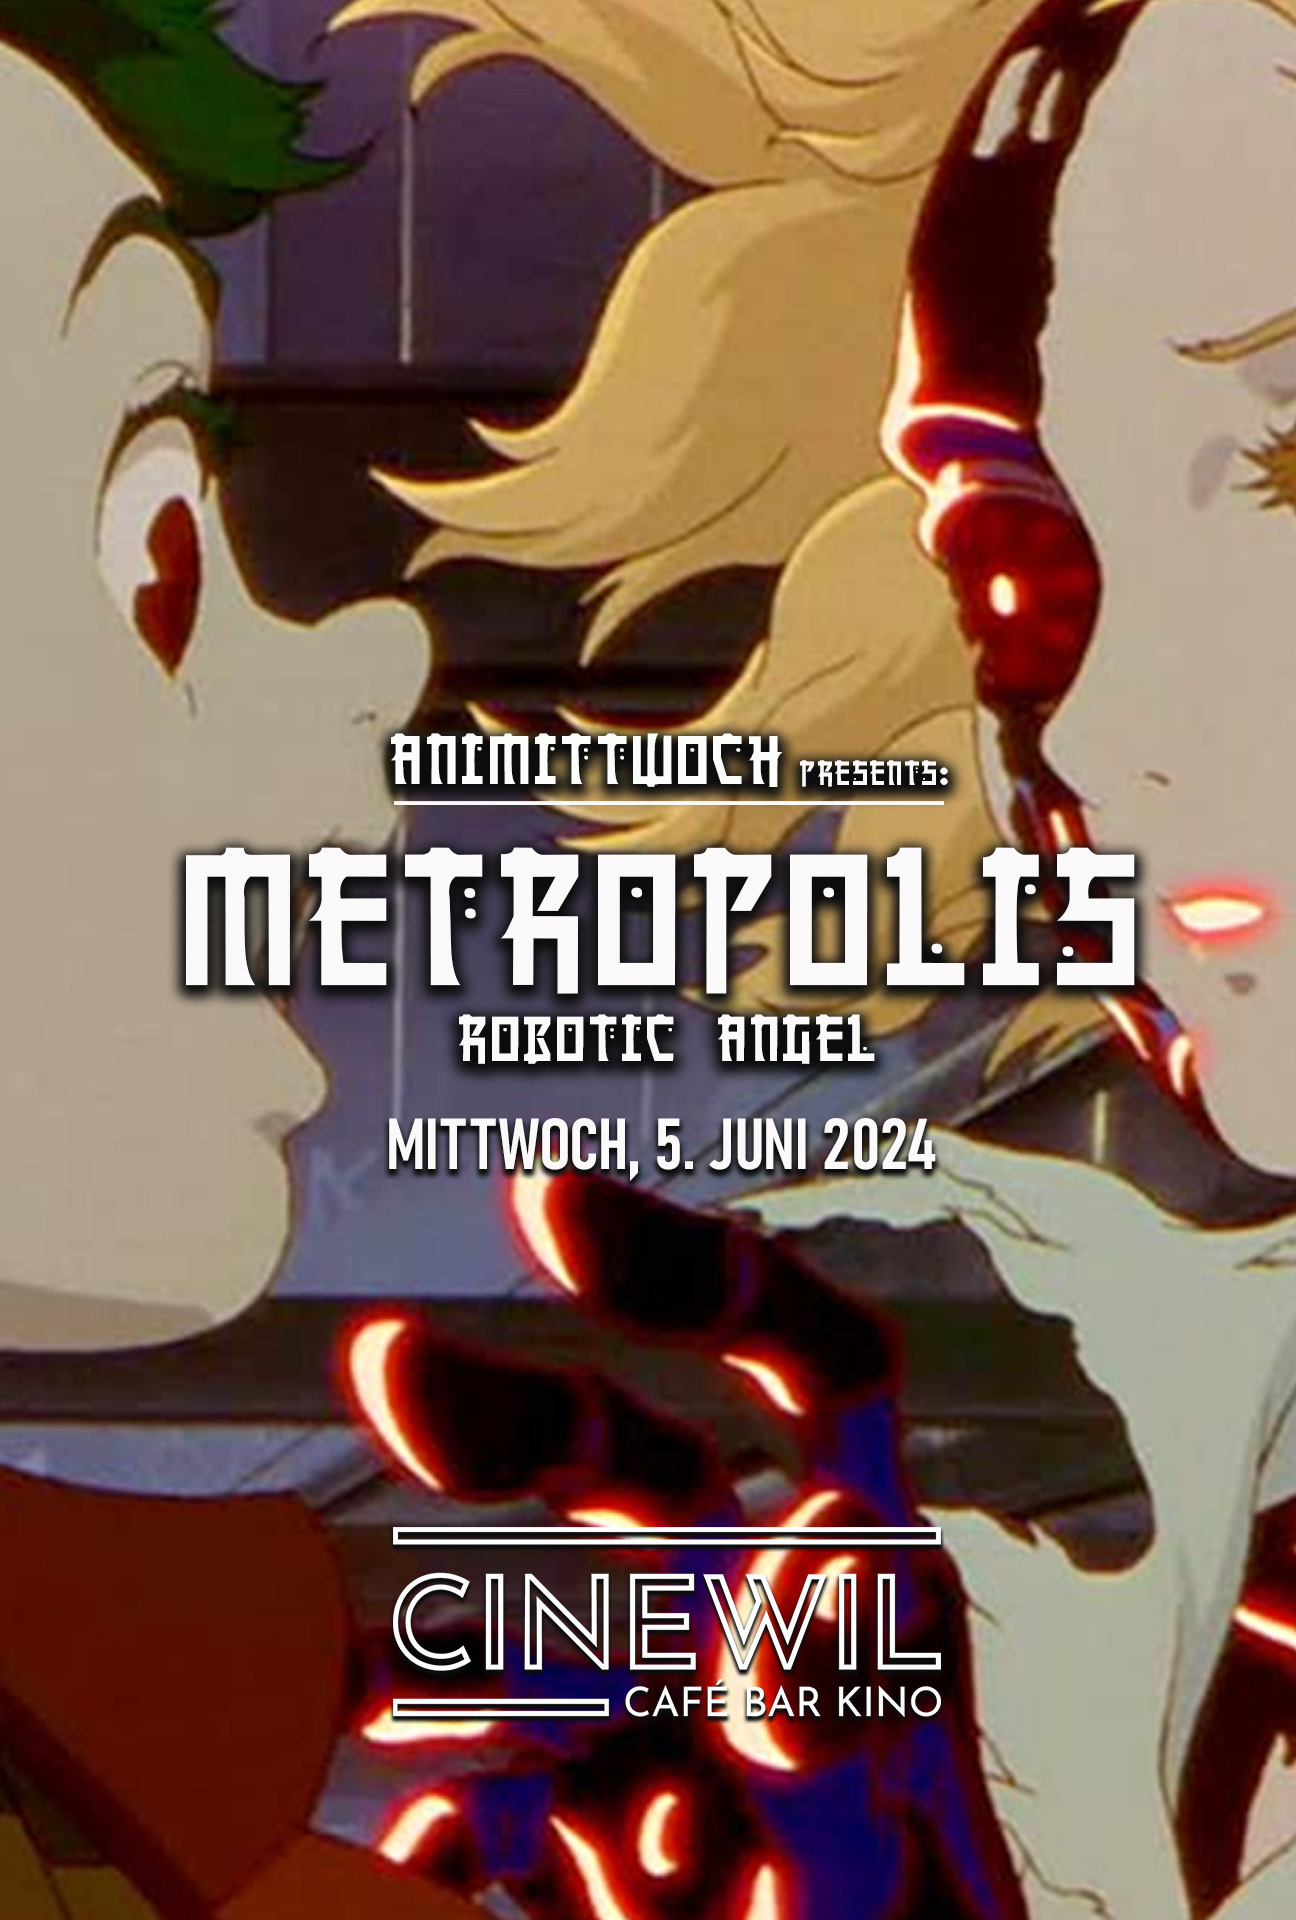 METROPOLIS (ROBOTIC ANGEL)